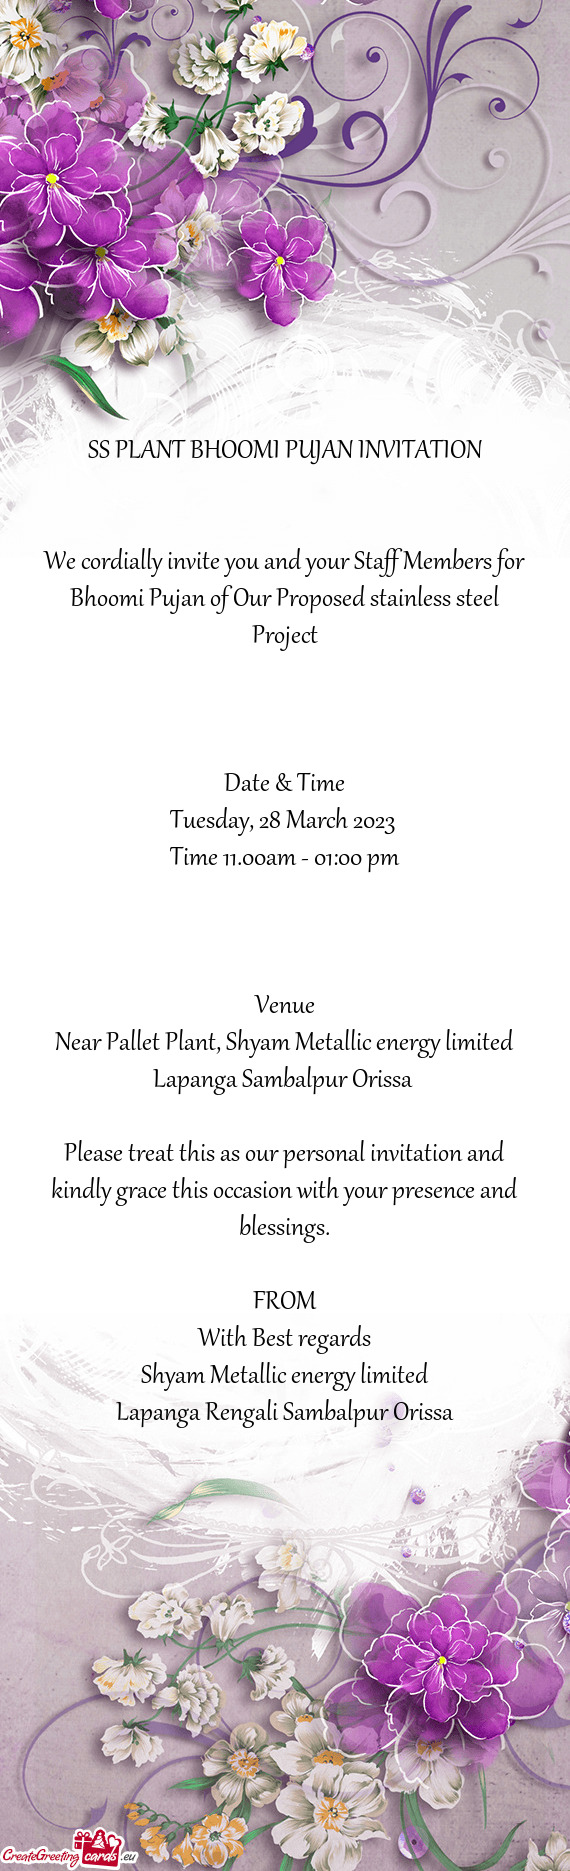 SS PLANT BHOOMI PUJAN INVITATION